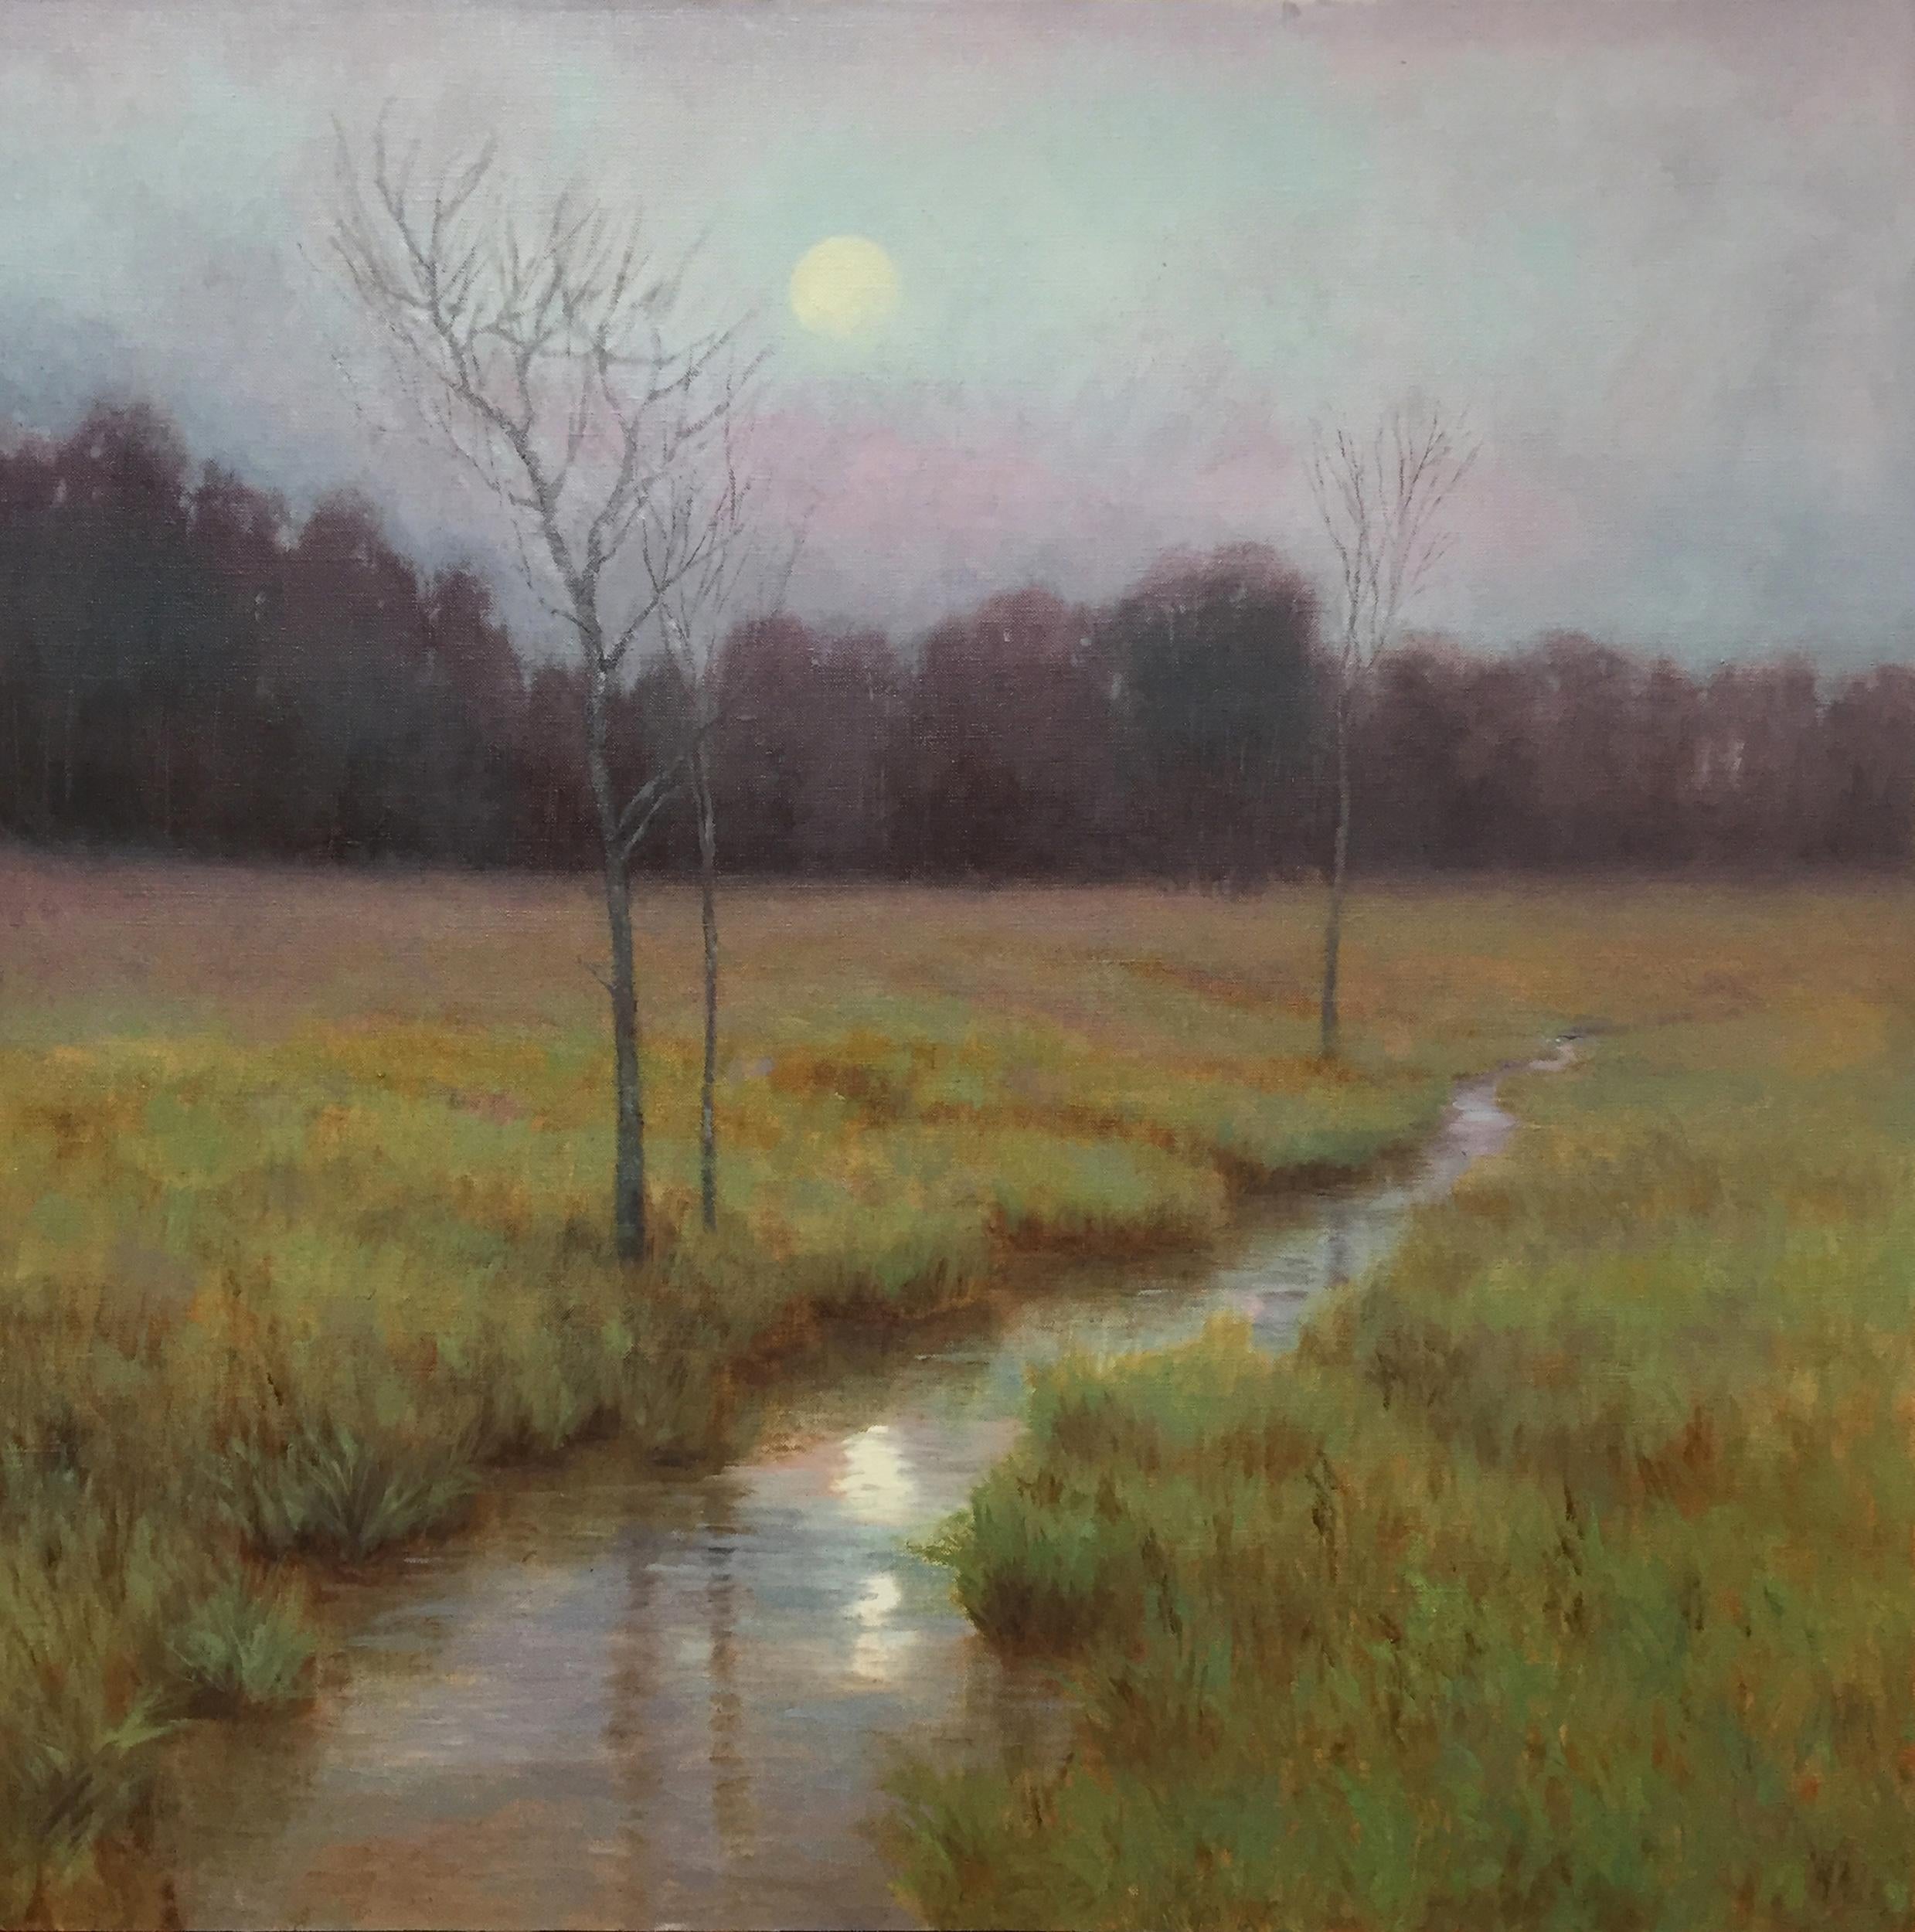 Spring Moonrise (Stream, lush, reflection, cool colors) - Painting by Deborah Paris